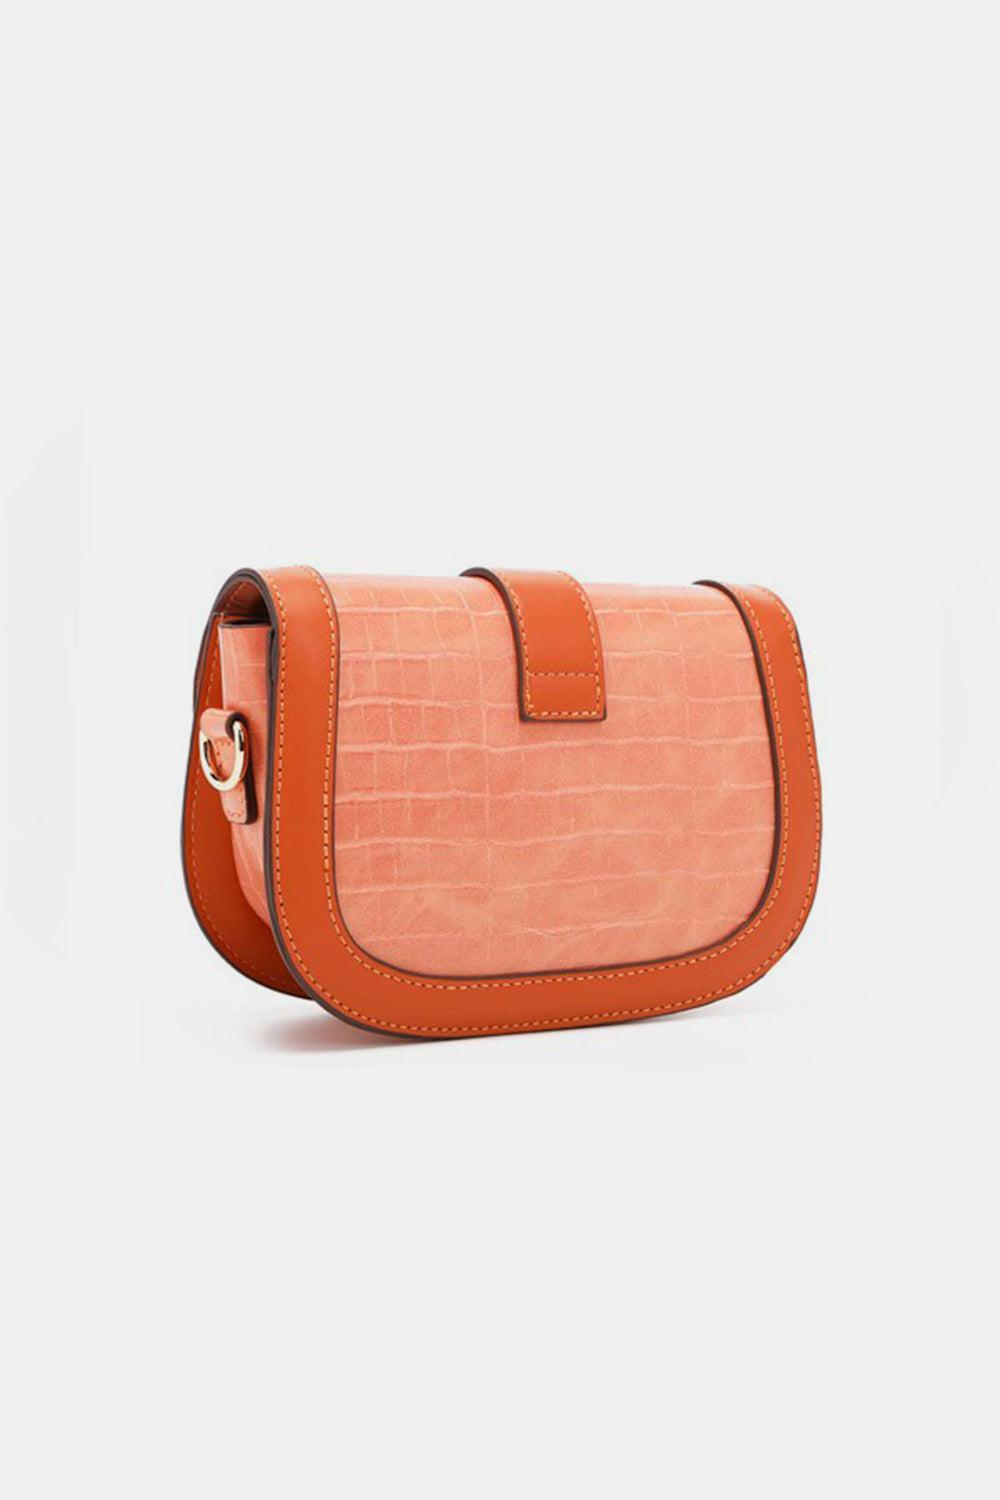 a small orange purse on a white background